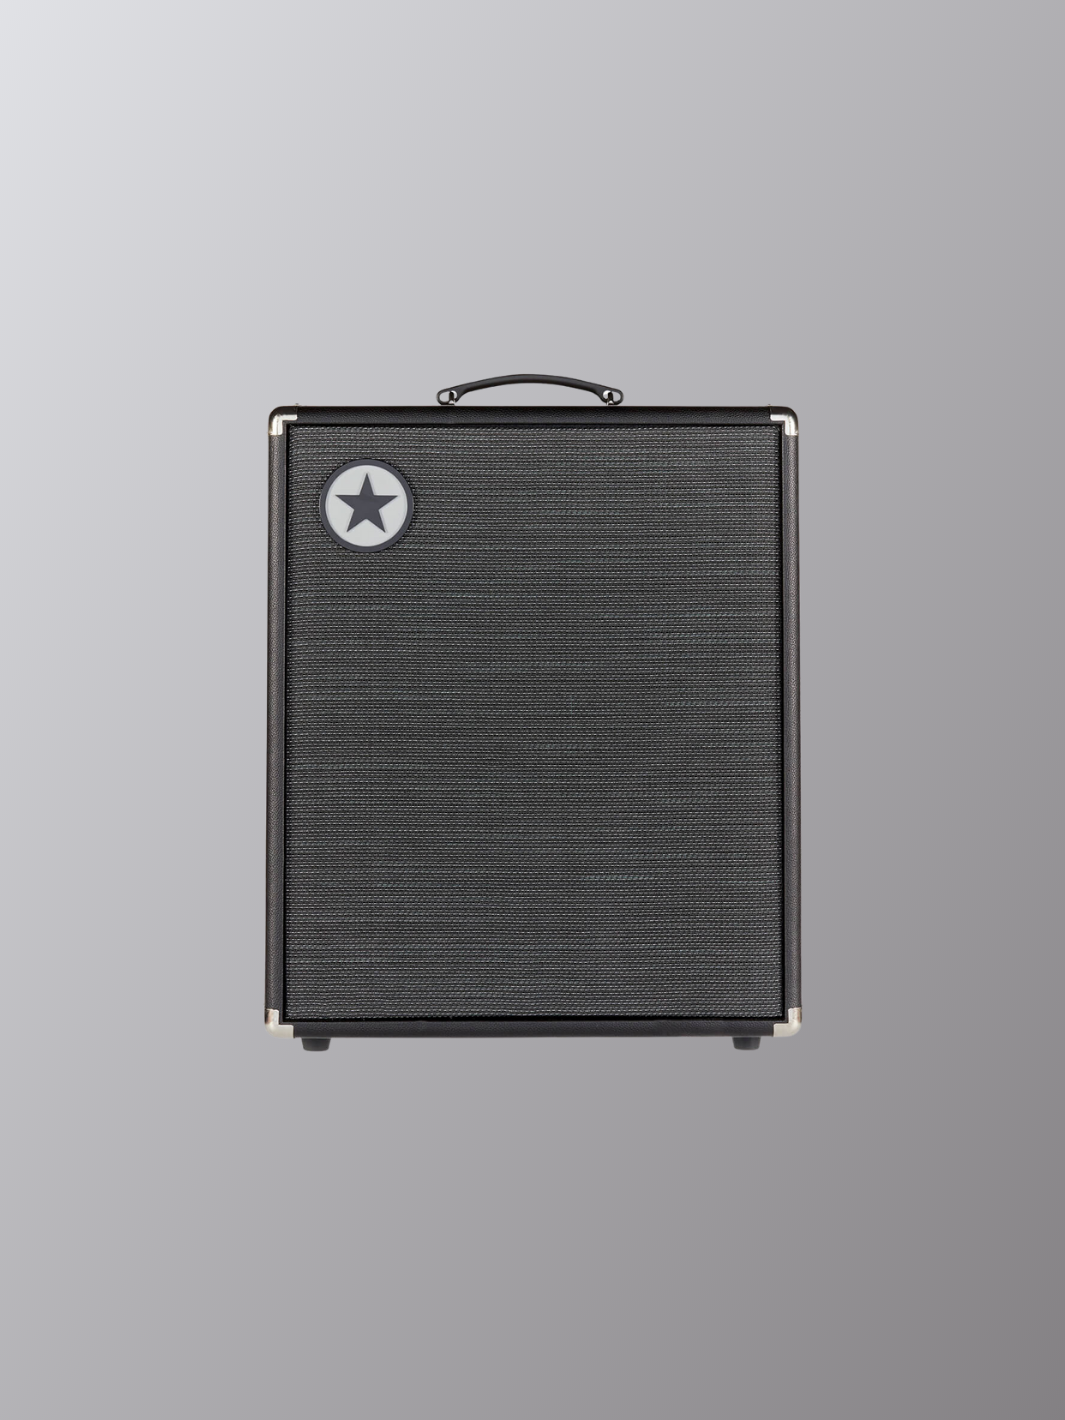 Blackstar-Unity 500W 2x10 Combo Bass Amp